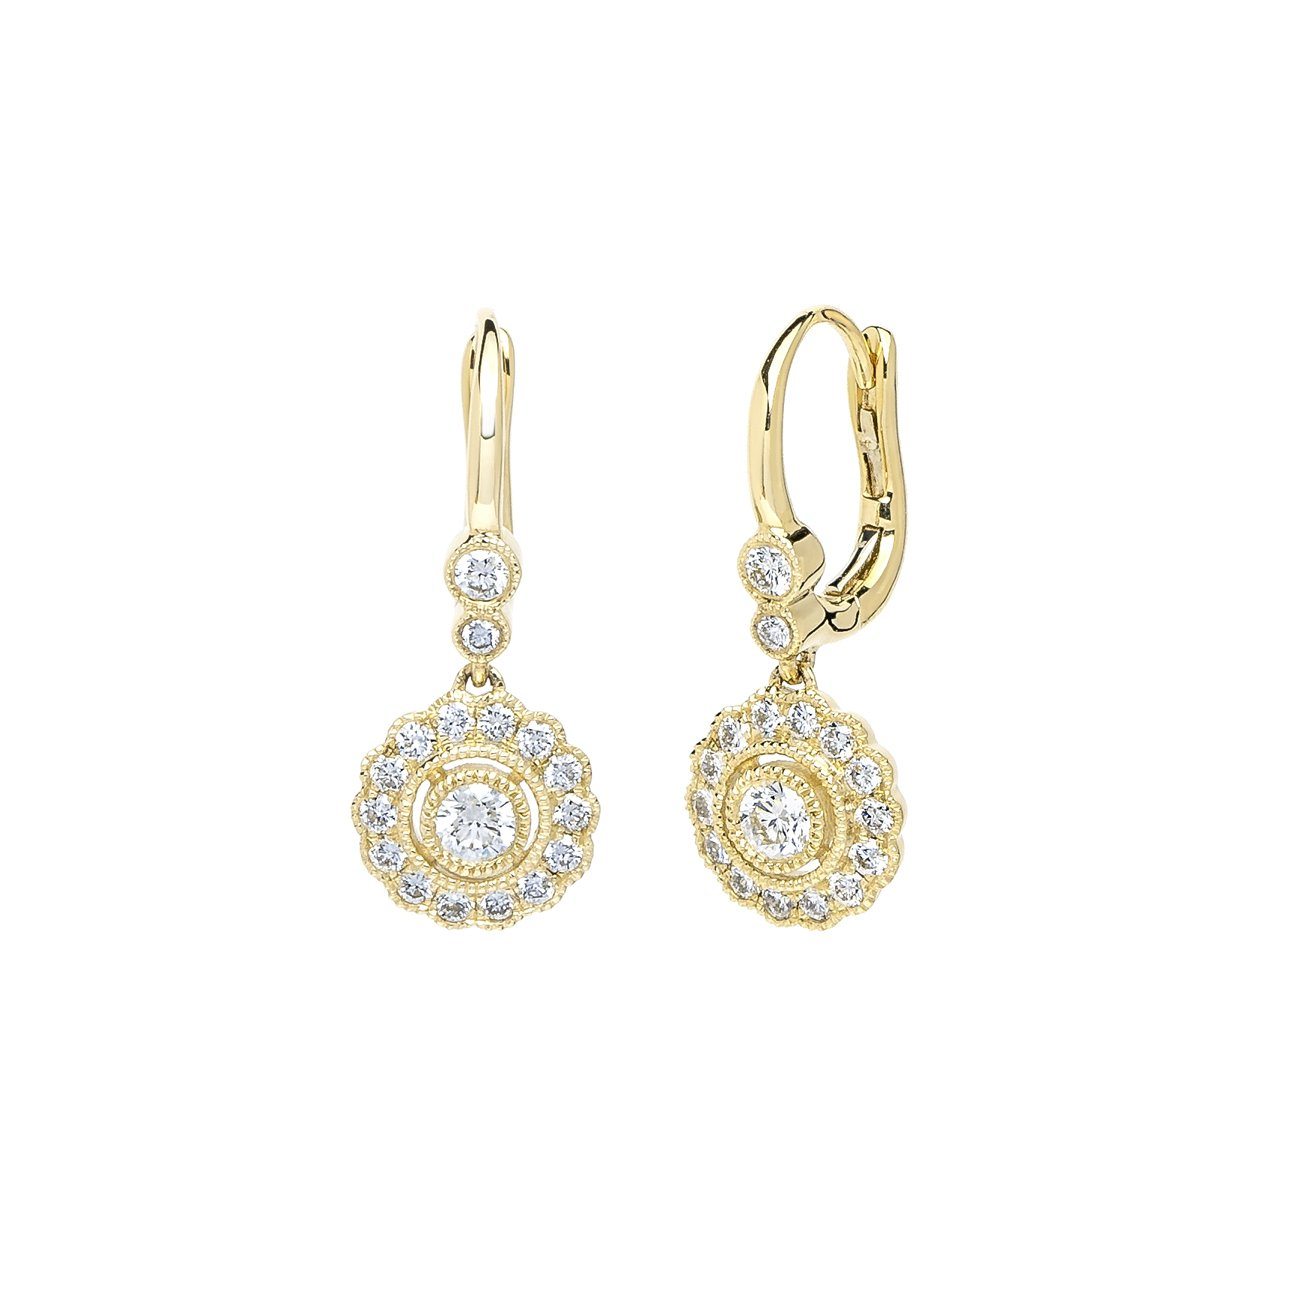 Claire Round Vintage Drop Earrings Fine Jewelry Earrings Princess Bride Diamonds 14K Yellow Gold 